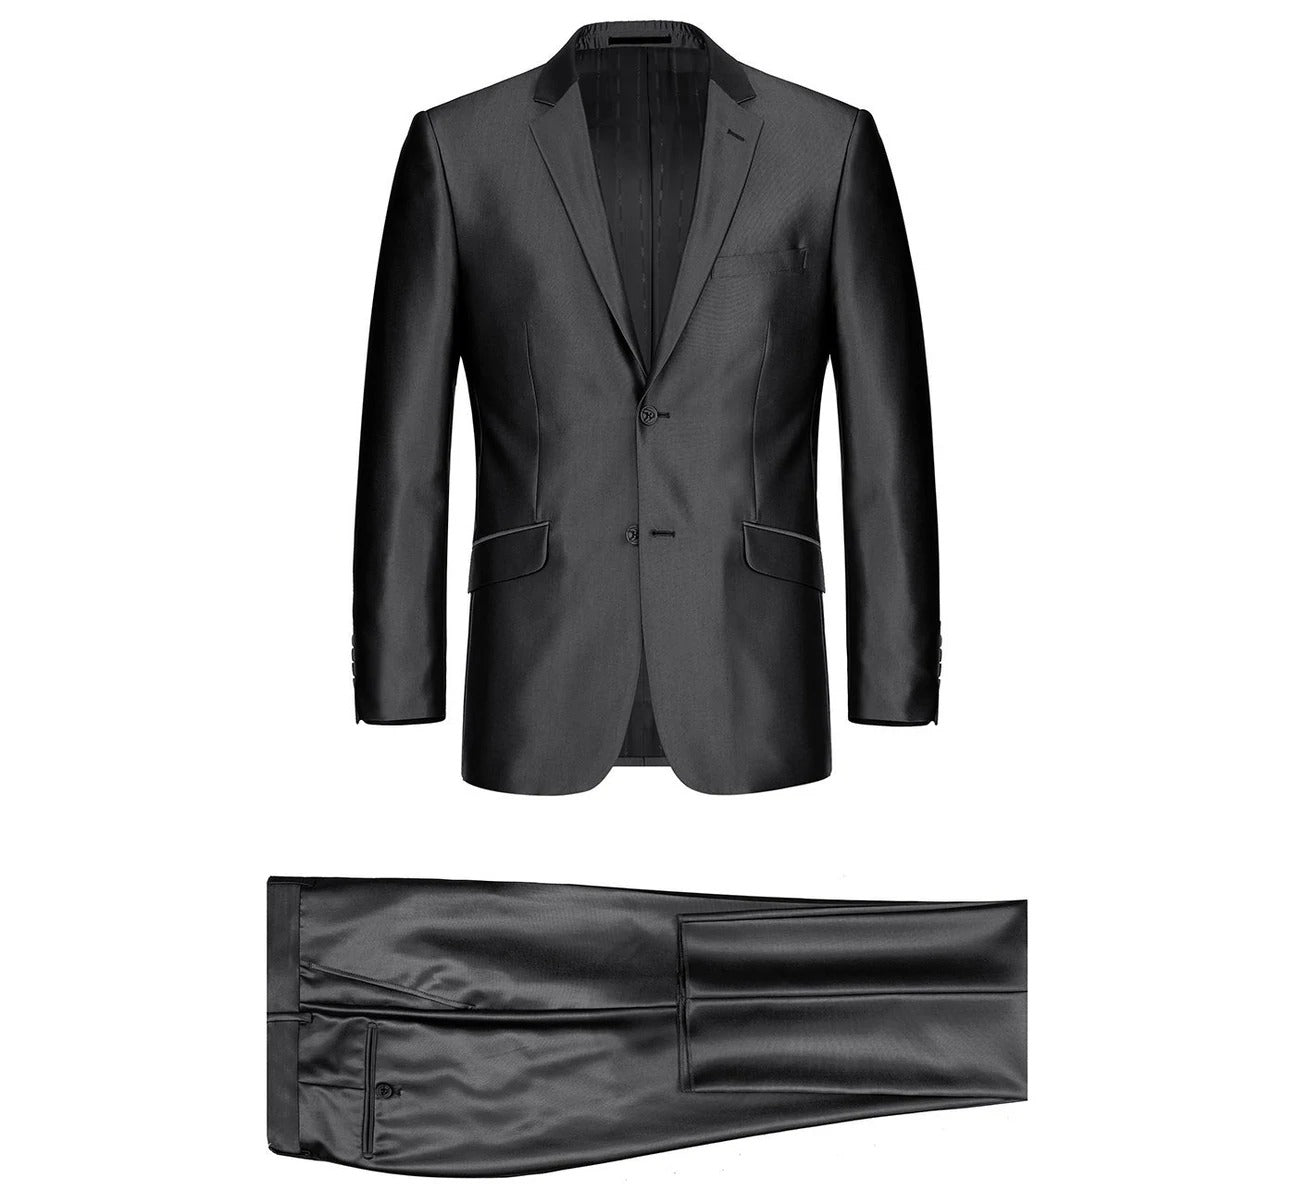 RENOIR Sharkskin Classic Fit Italian Styled Two Piece Suit 207-1